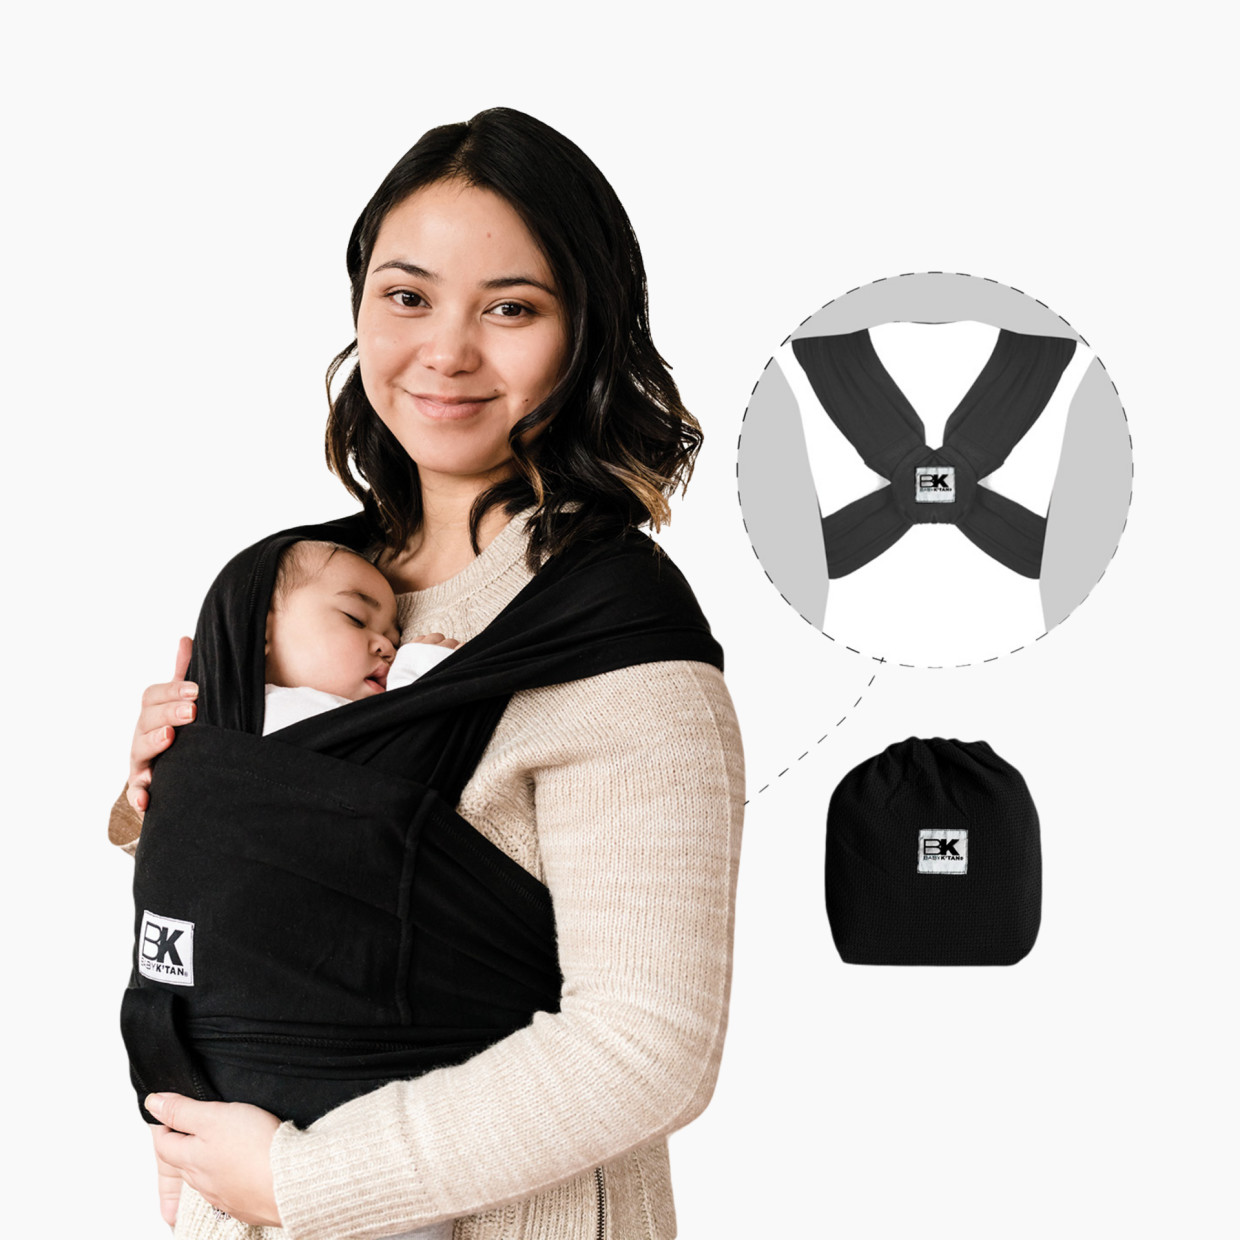 Baby K'tan Original Baby Wrap Carrier - Black, Small.